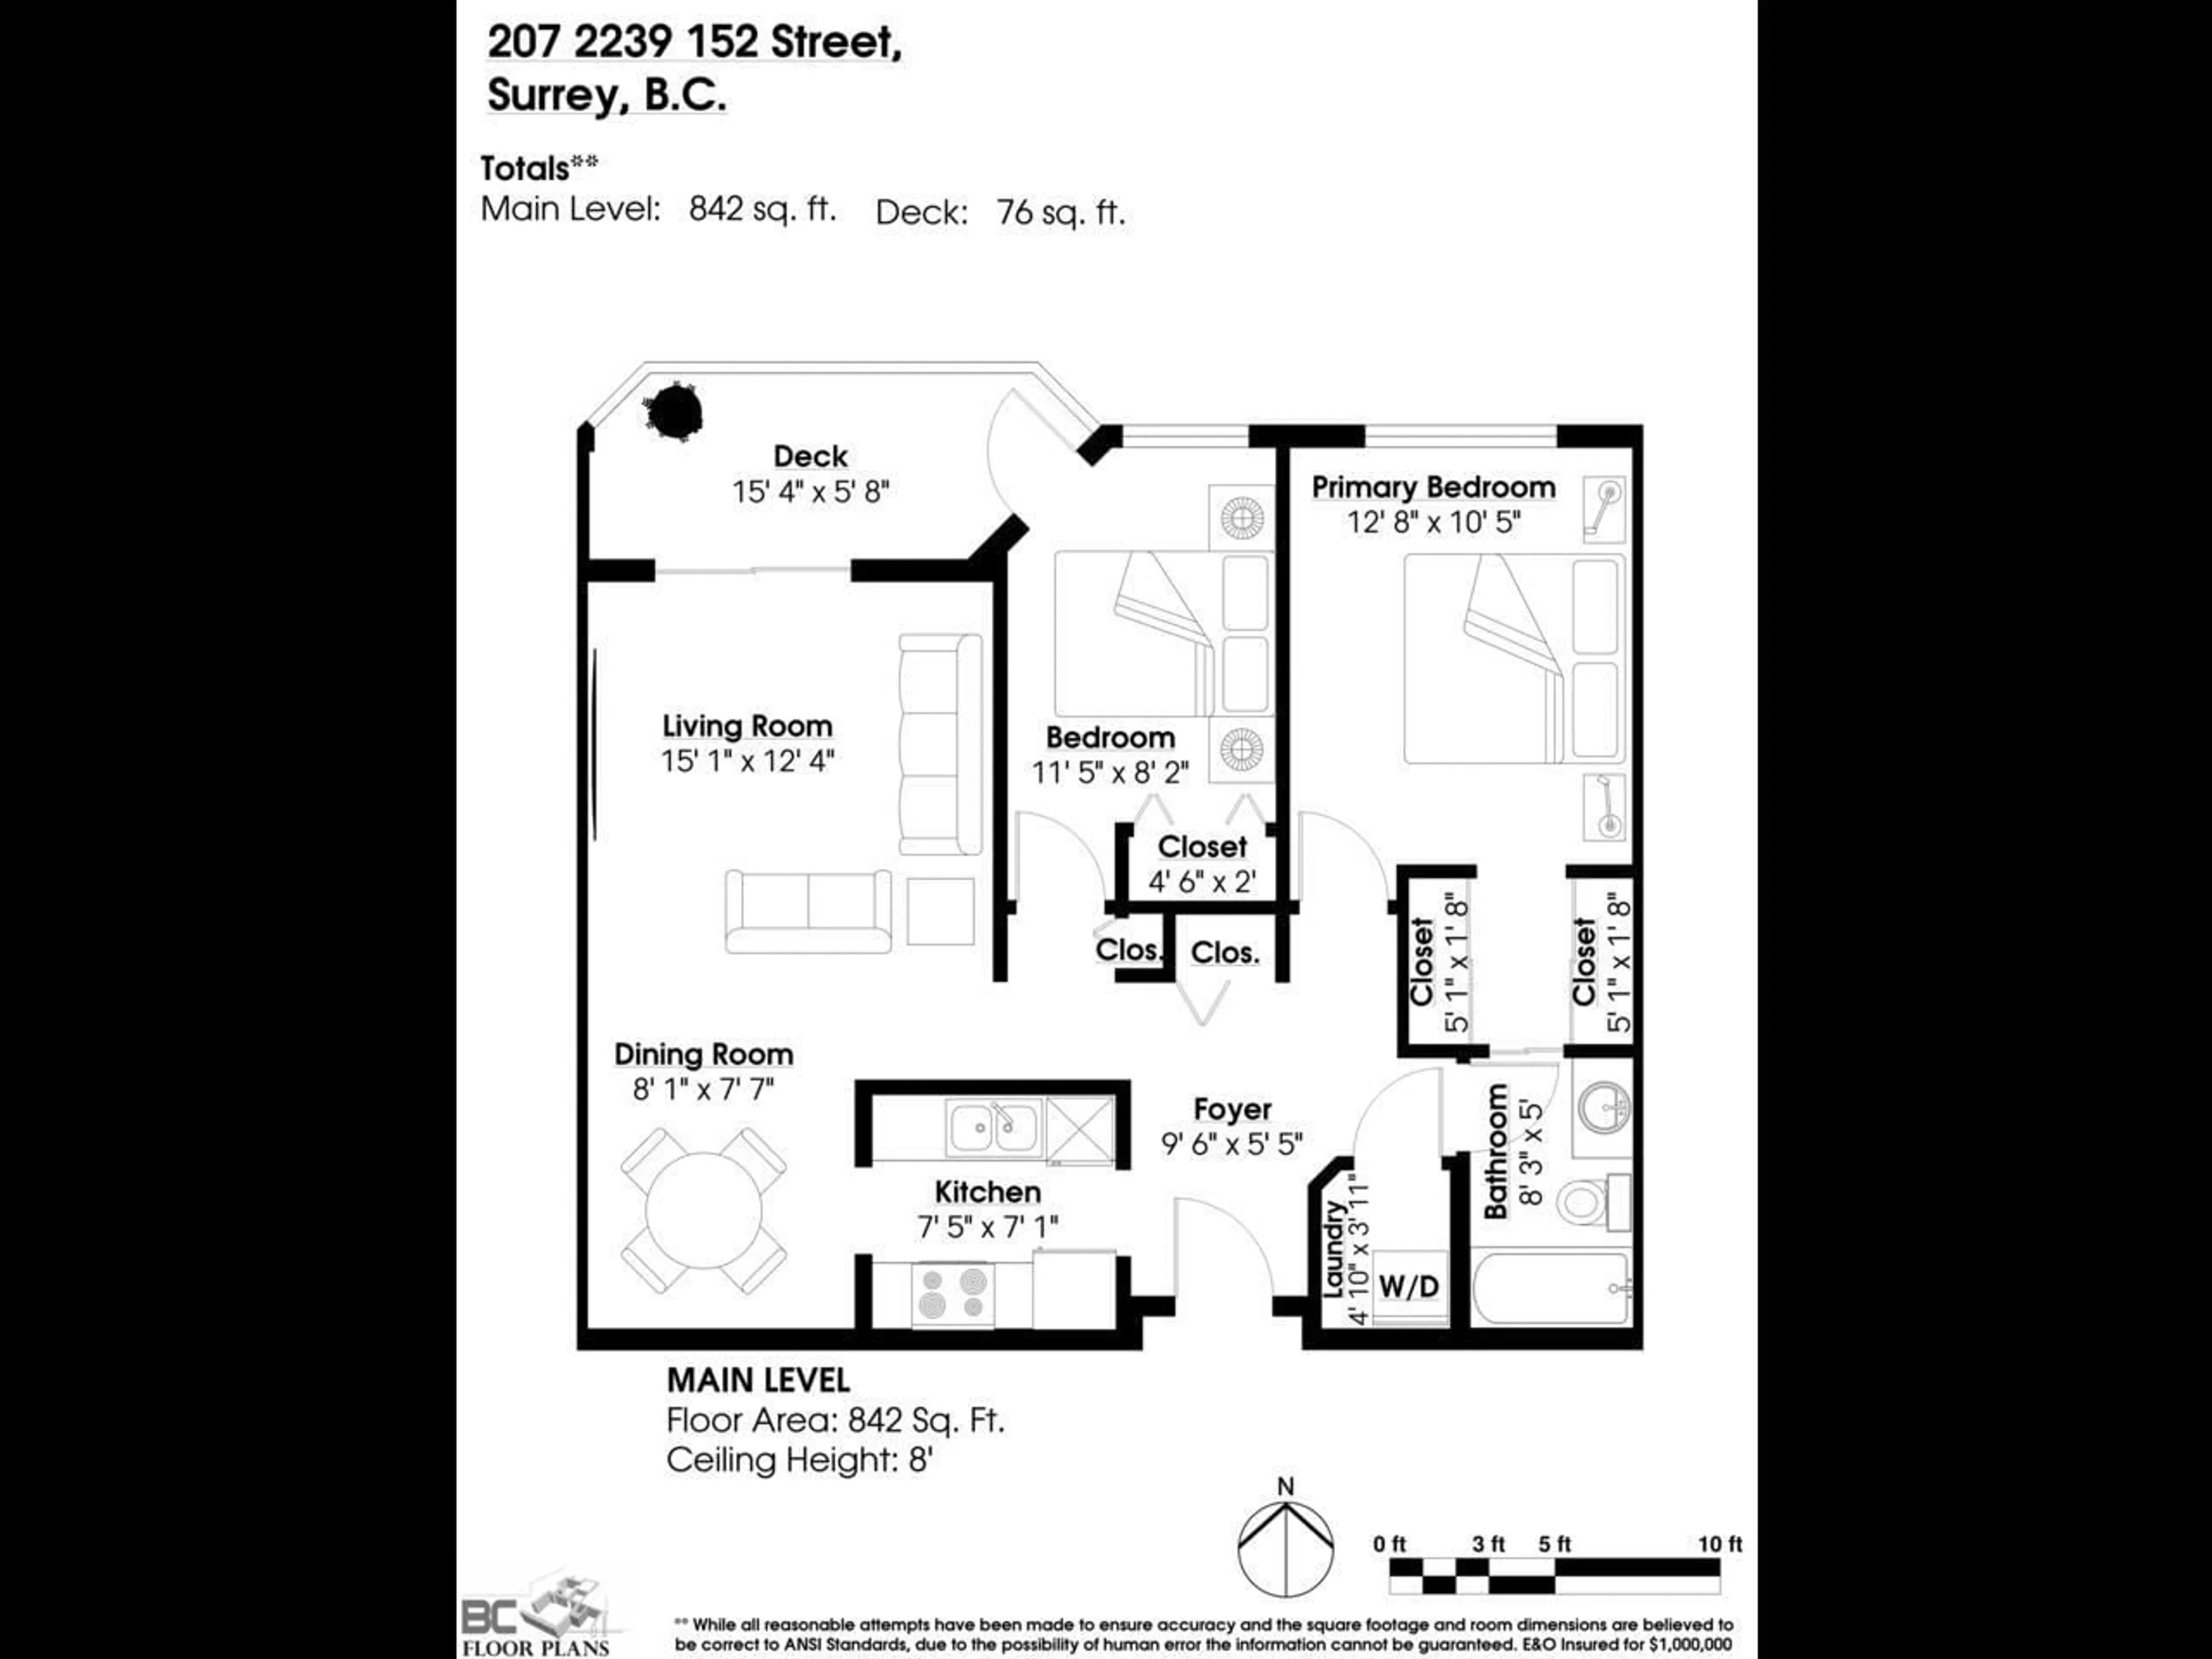 Floor plan for 207 2239 152 STREET, Surrey British Columbia V4A4P1